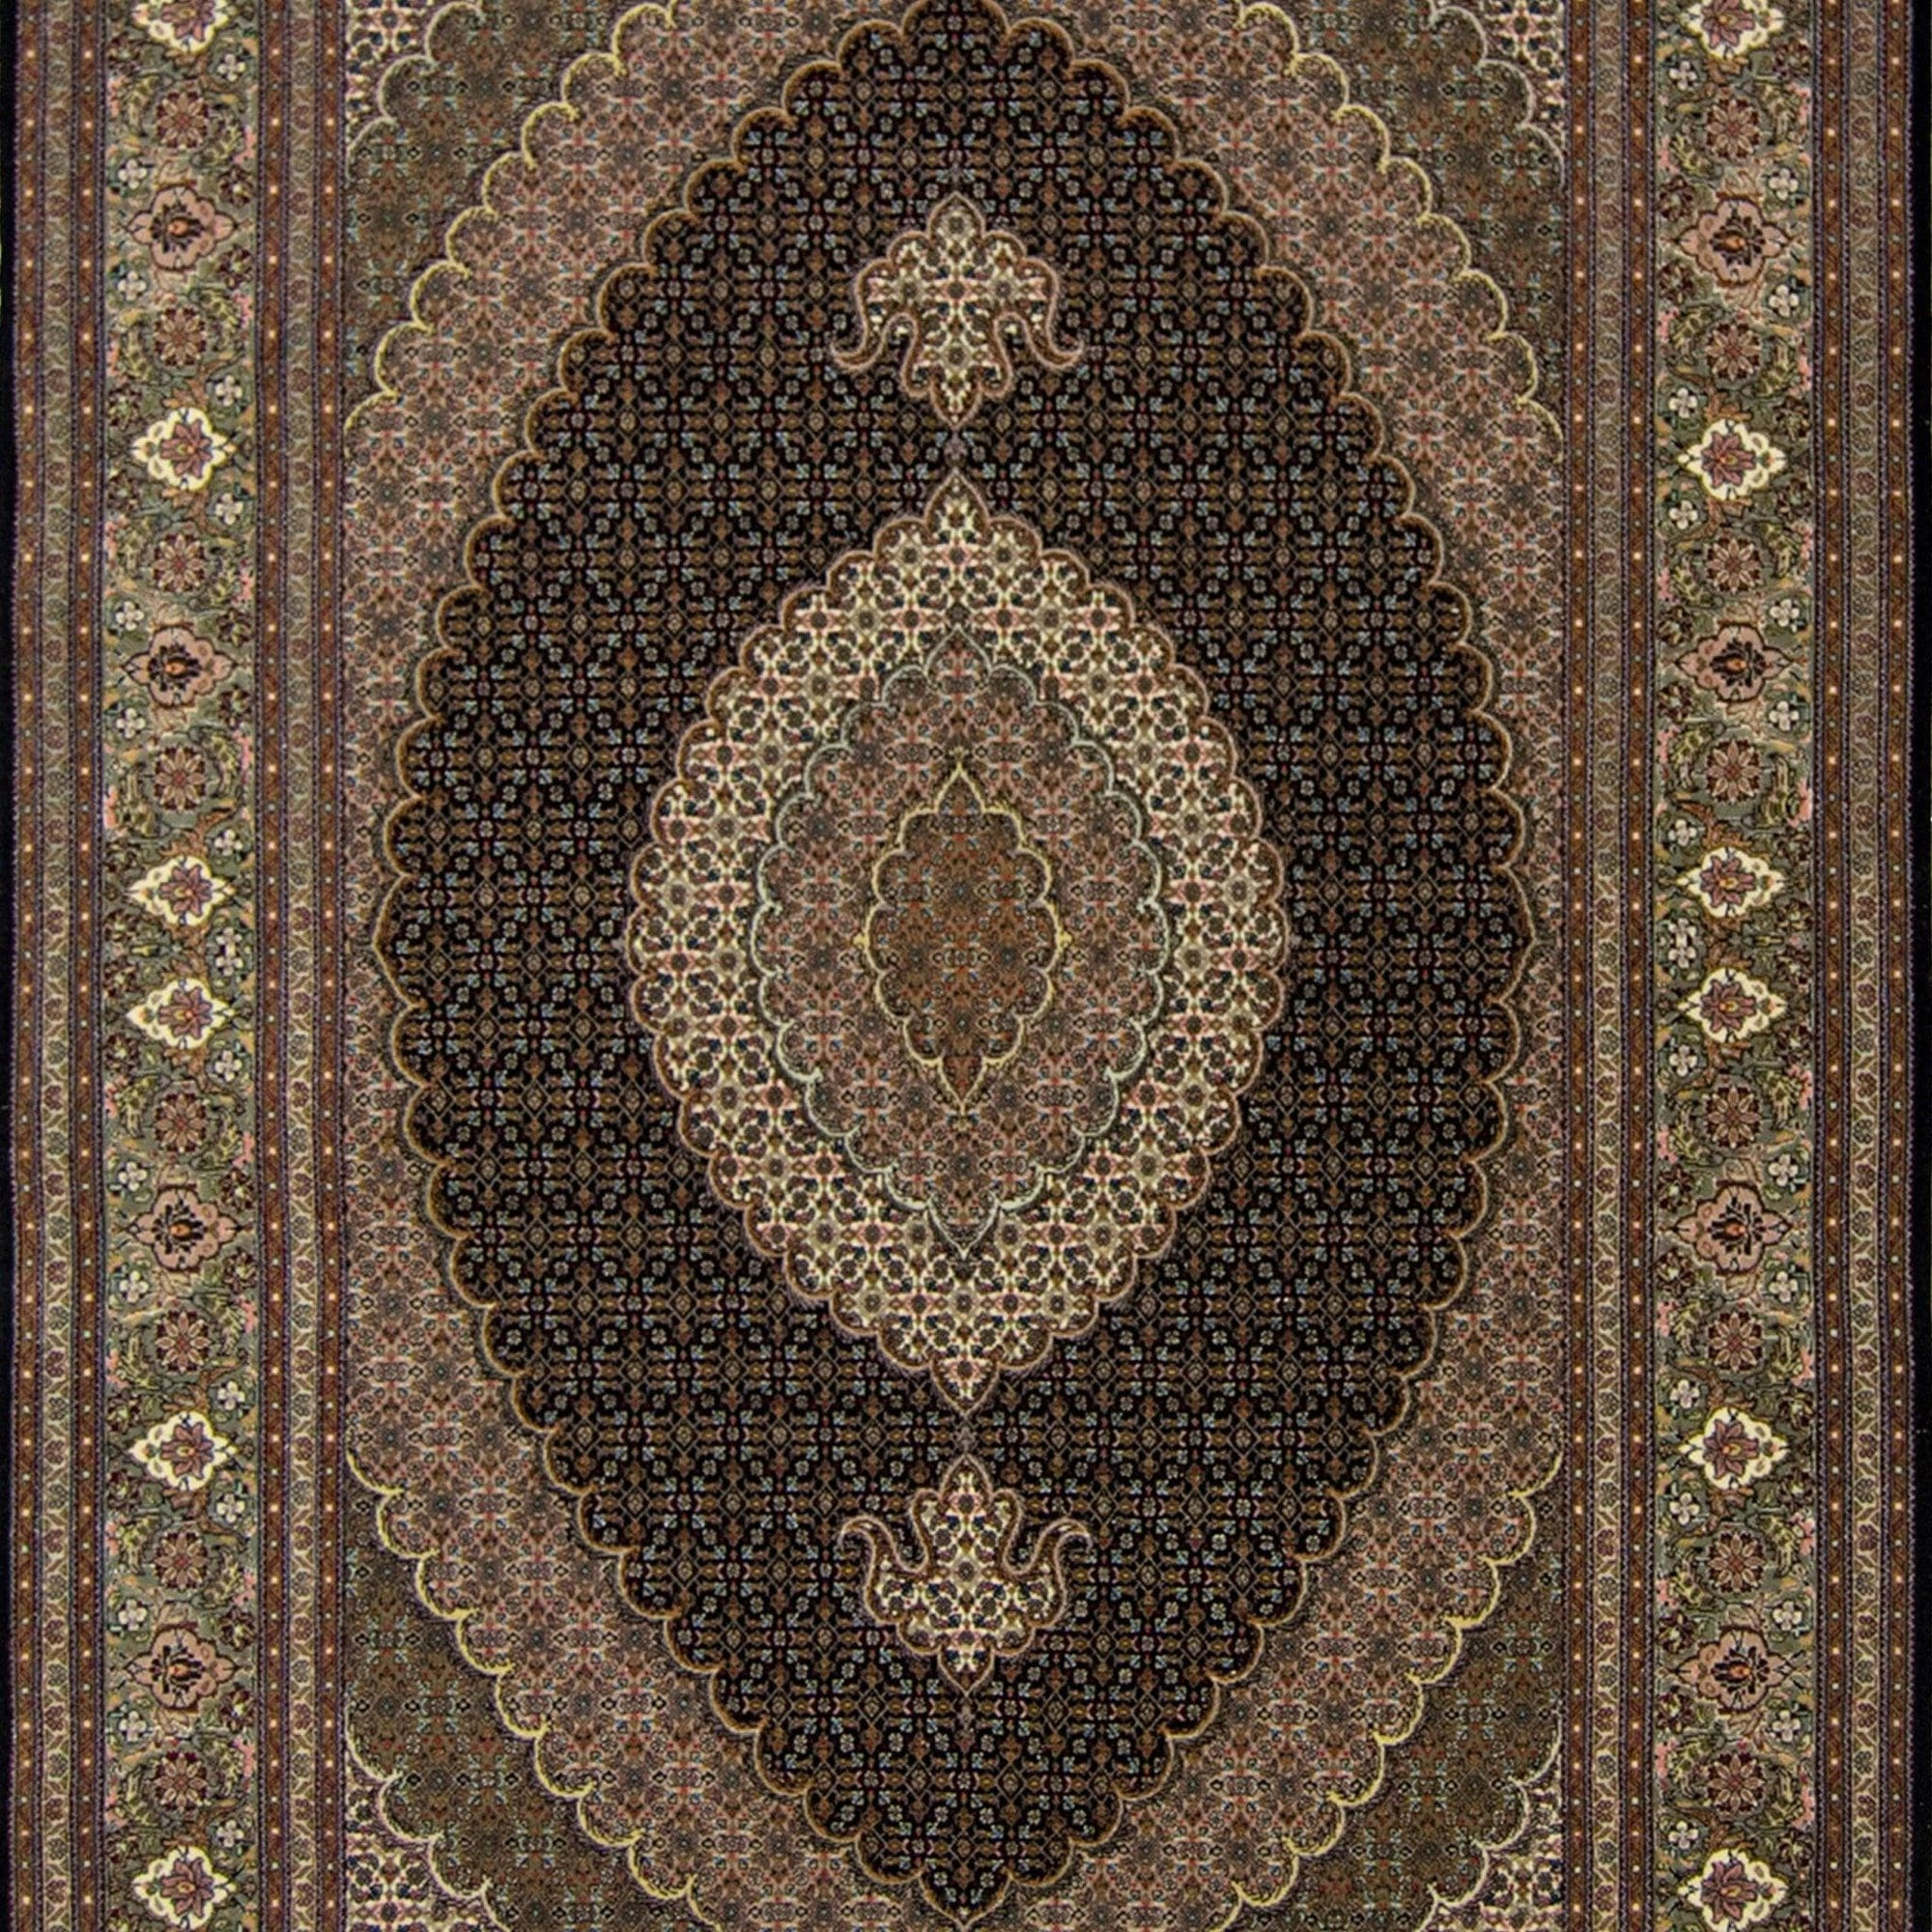 Fine Hand-knotted Persian Tabriz - Mahi Design Rug 149cm x 208cm